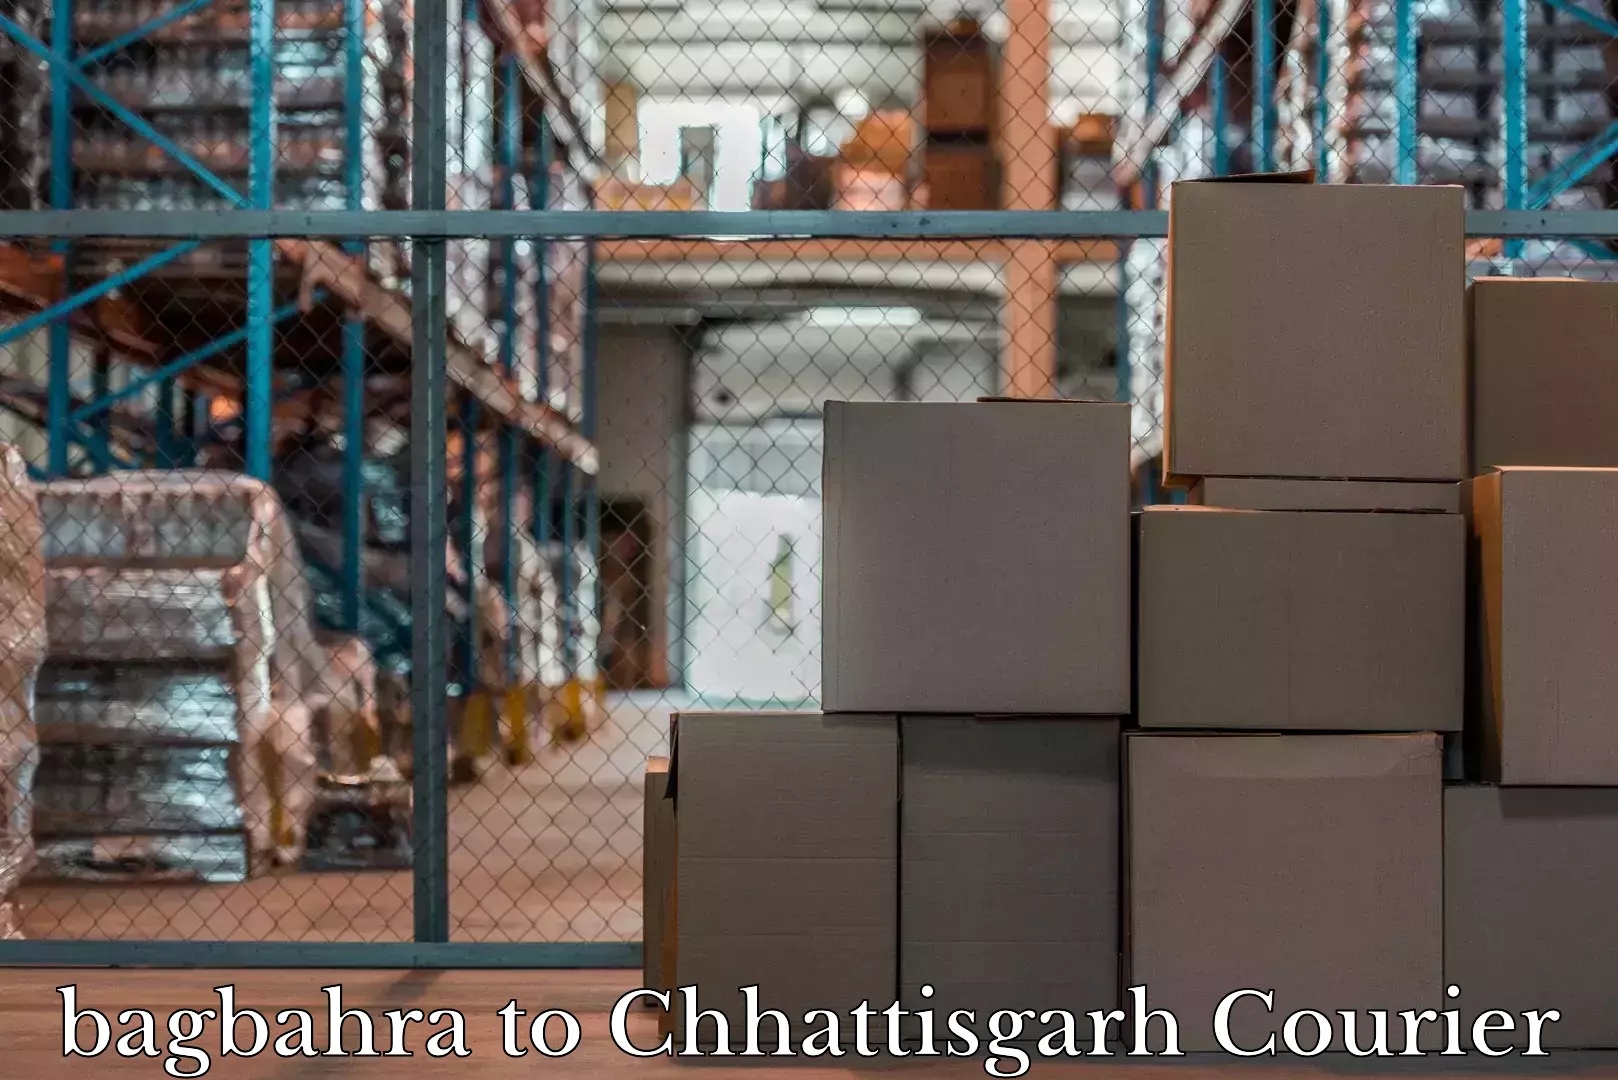 Professional baggage delivery bagbahra to Korea Chhattisgarh